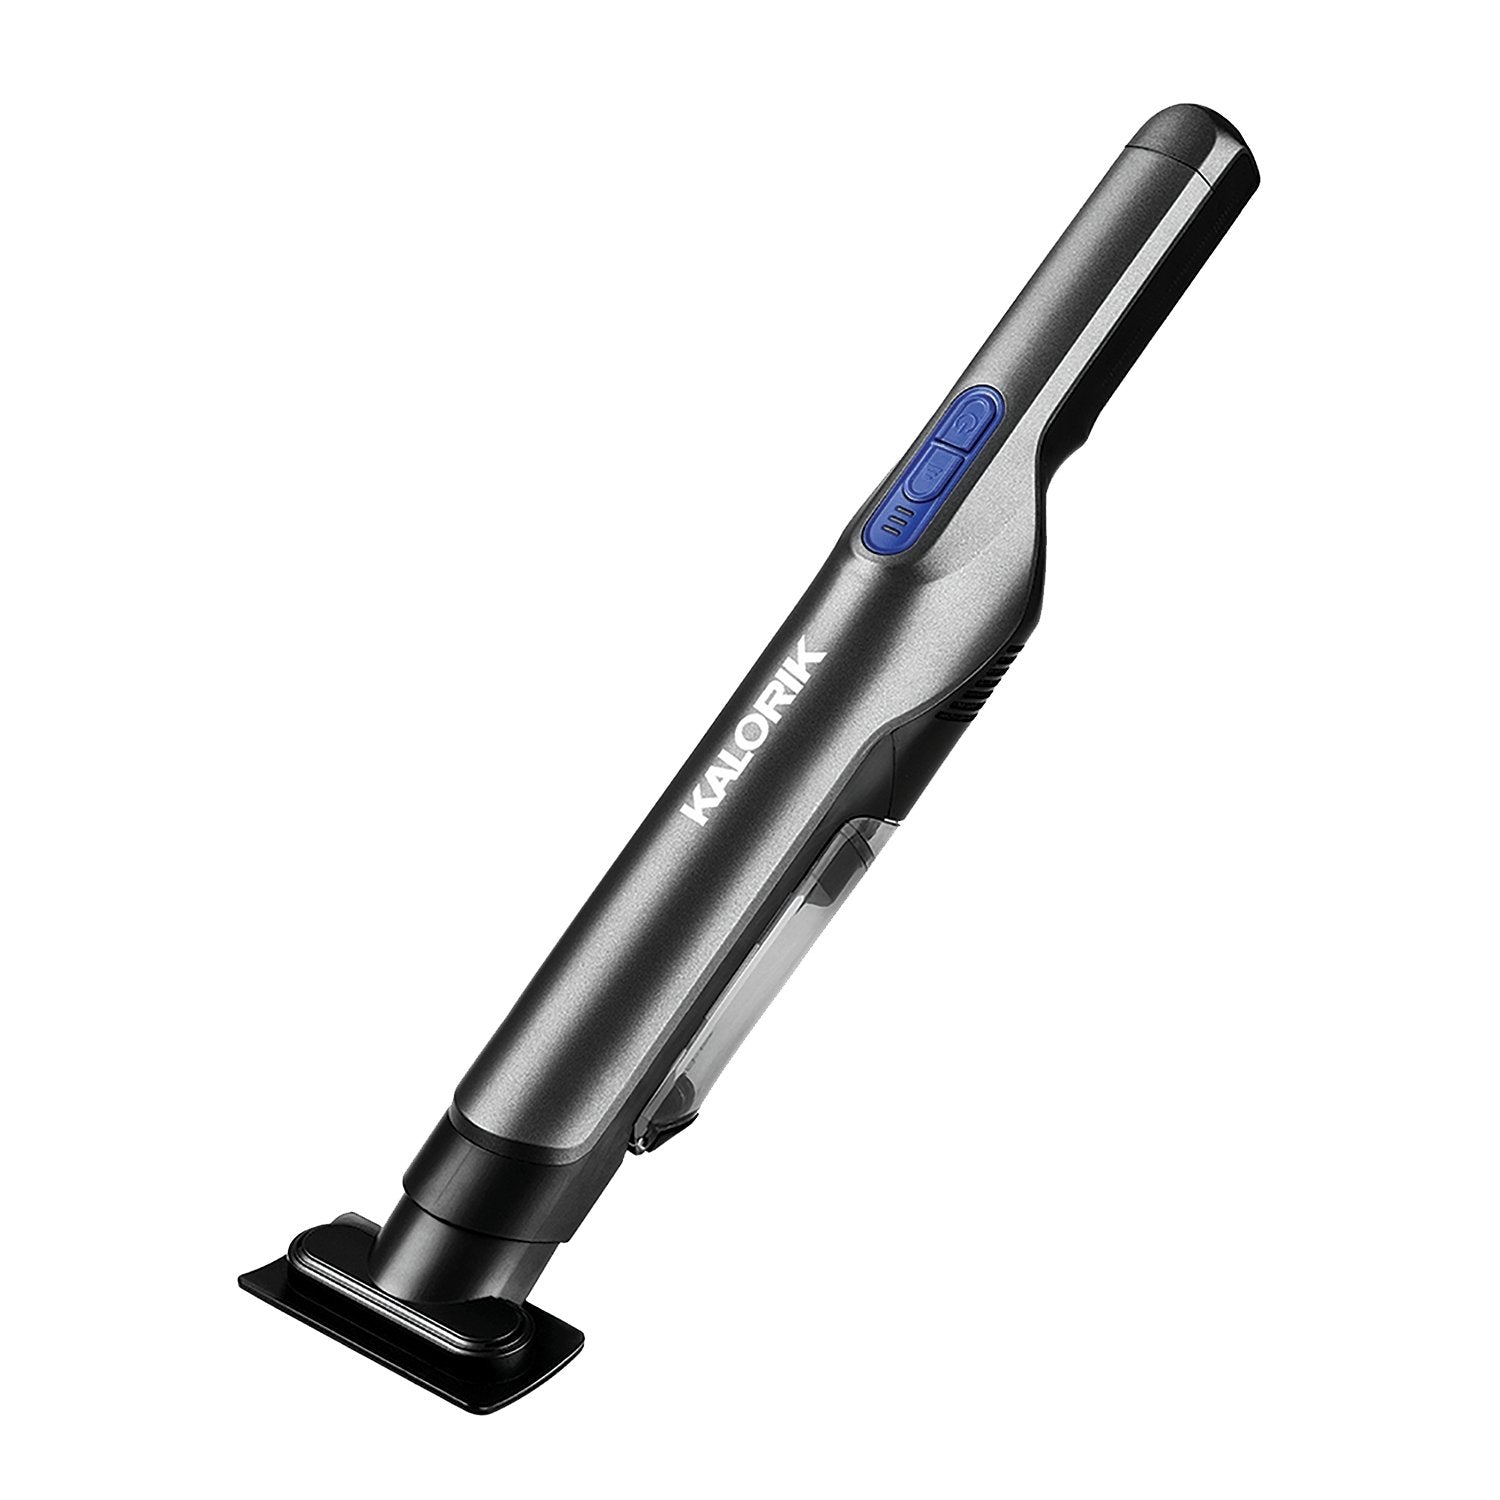 Kalorik Home Handheld Vacuum with Floor Extension, Gray